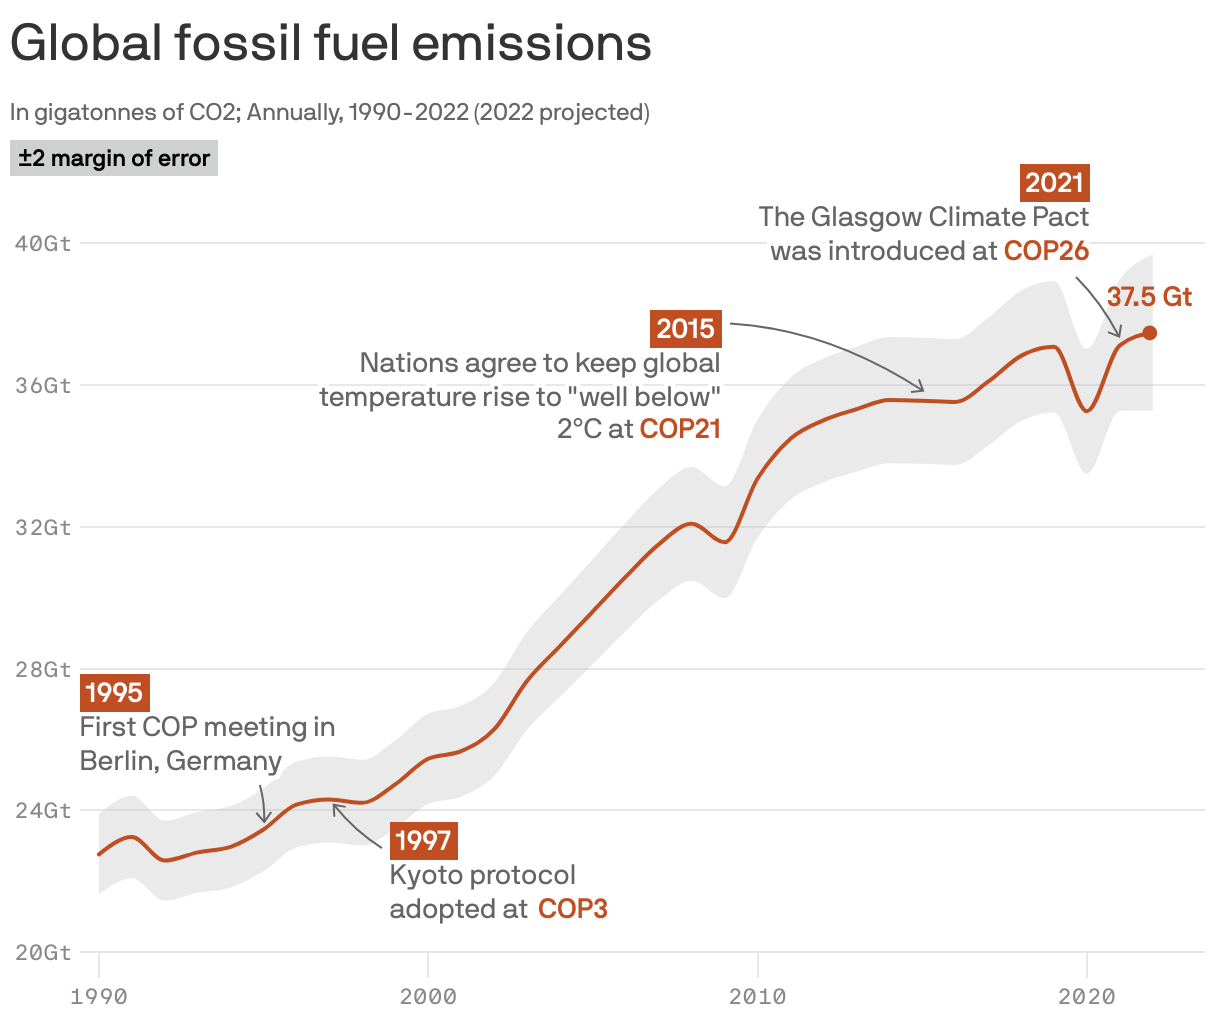 Global fossil fuel emissions